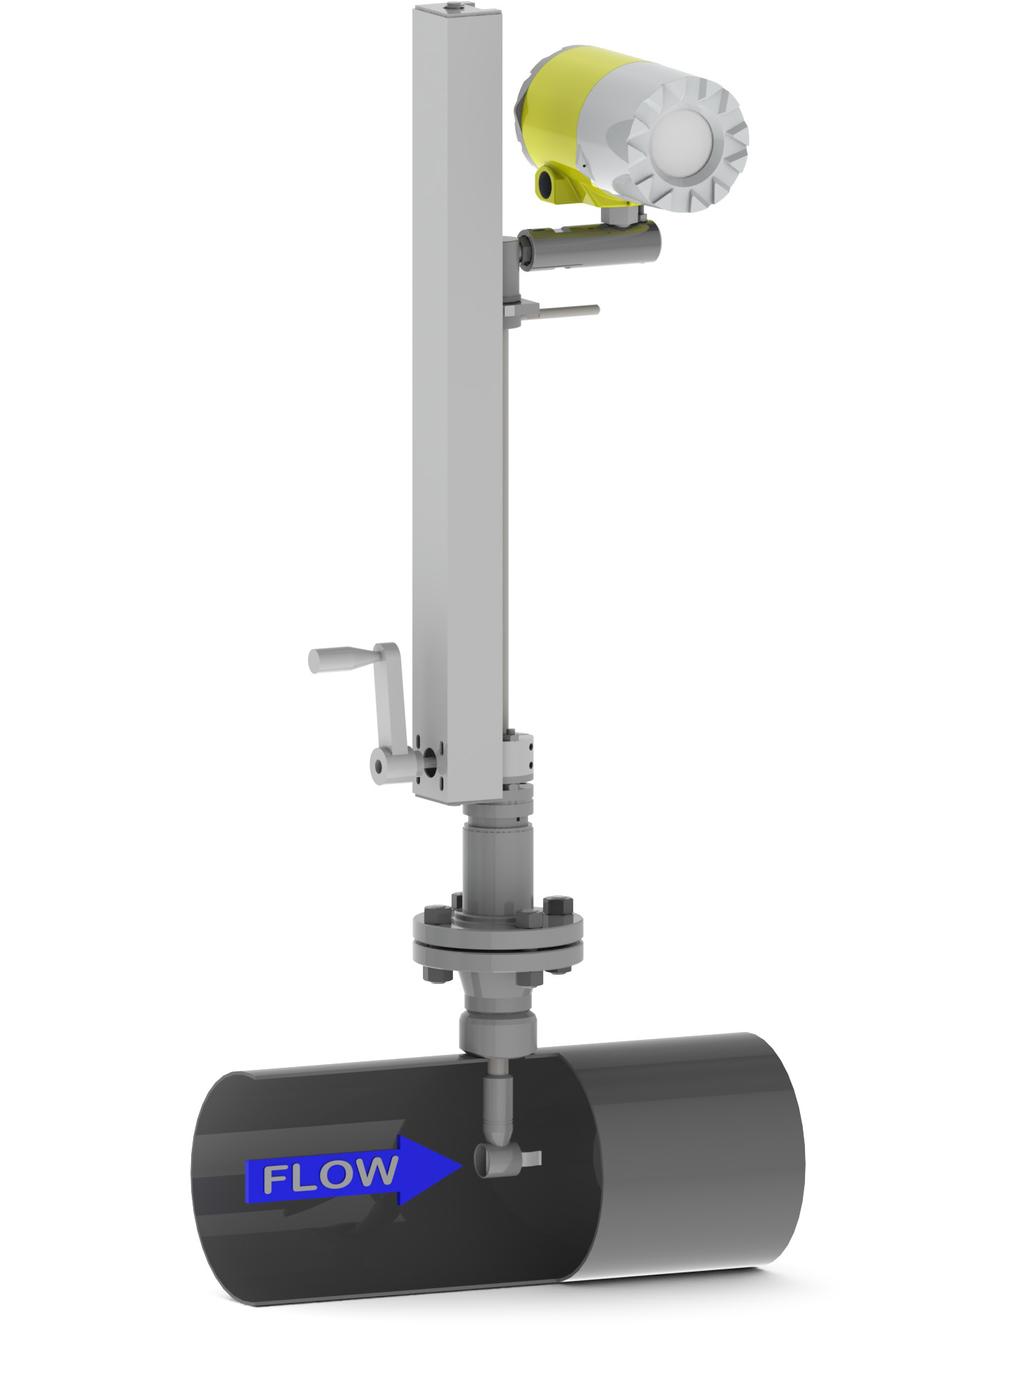 AVI Model Flow Meter Insertion Meter Measurement Principle The insertion vortex utilizes the same operating principle of the in-line meter.